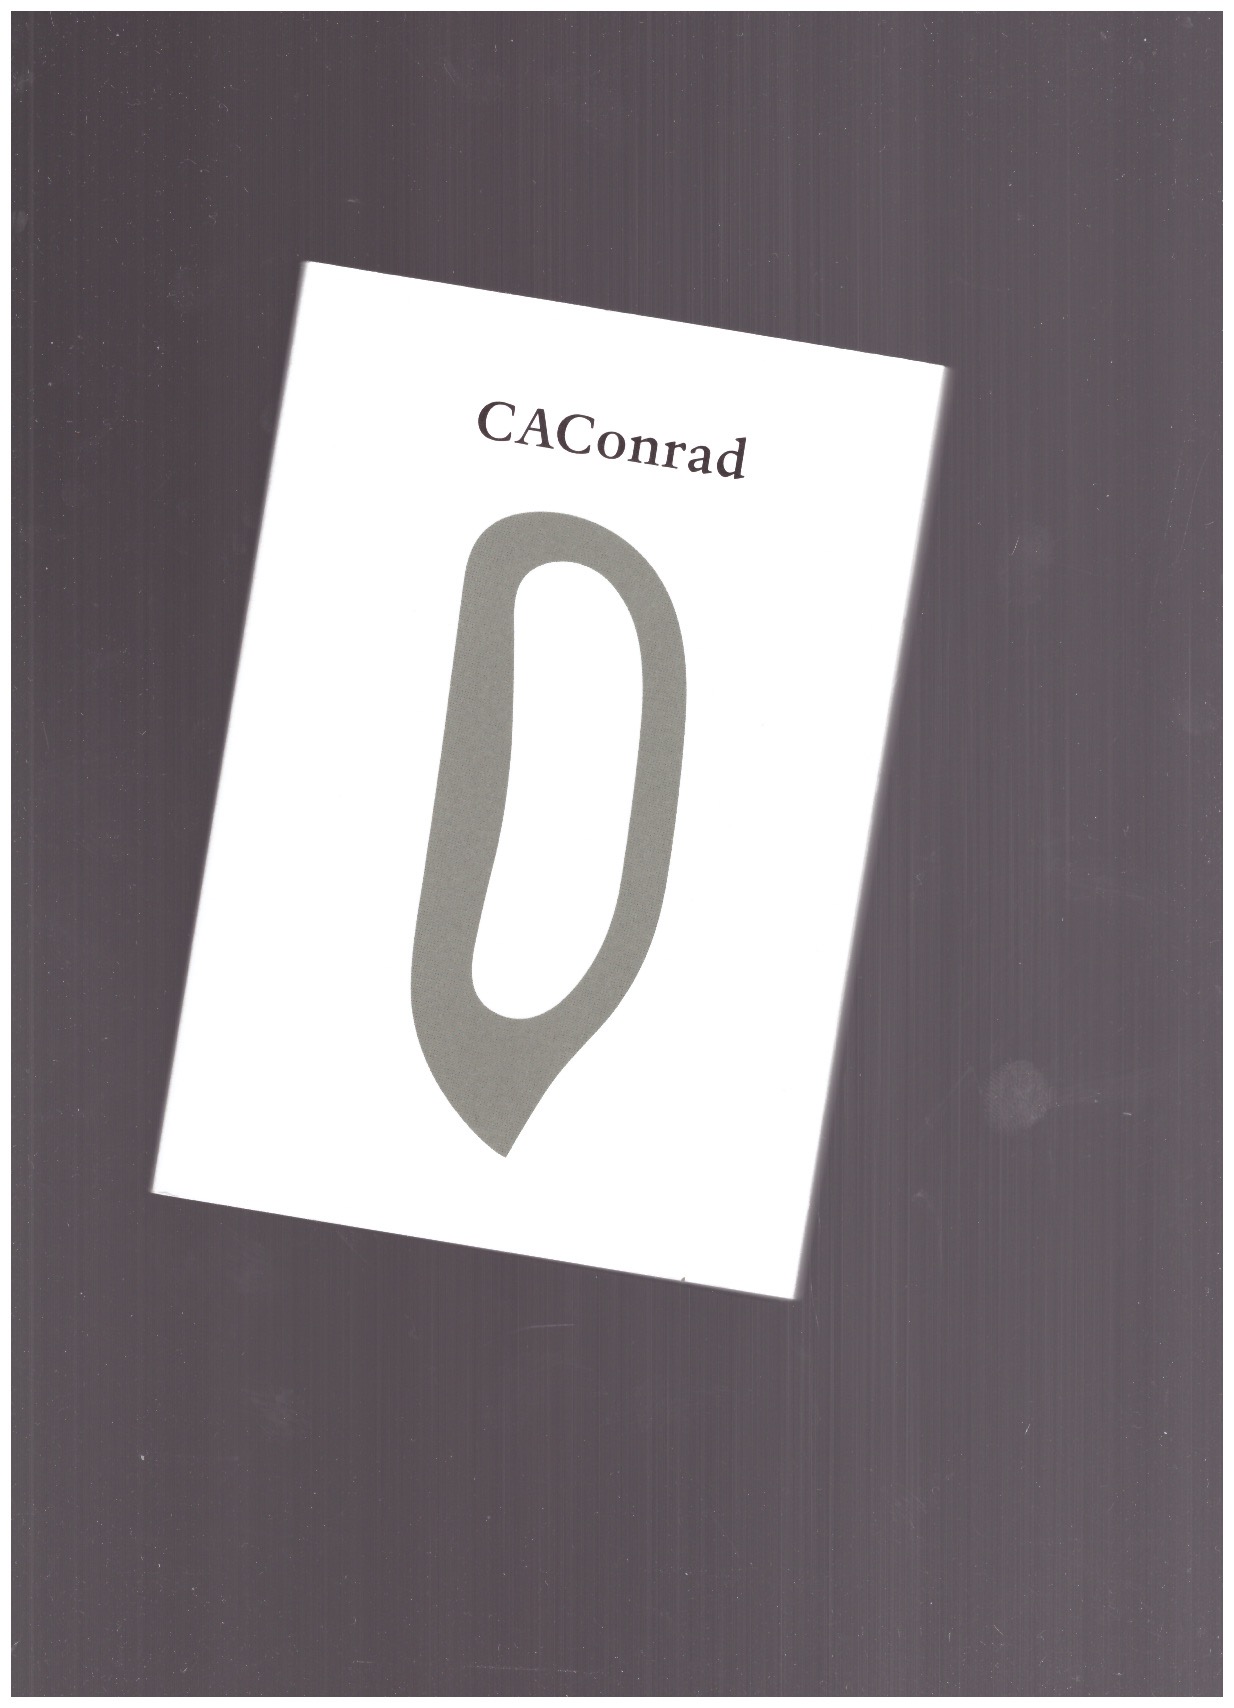 CAConrad - CAConrad